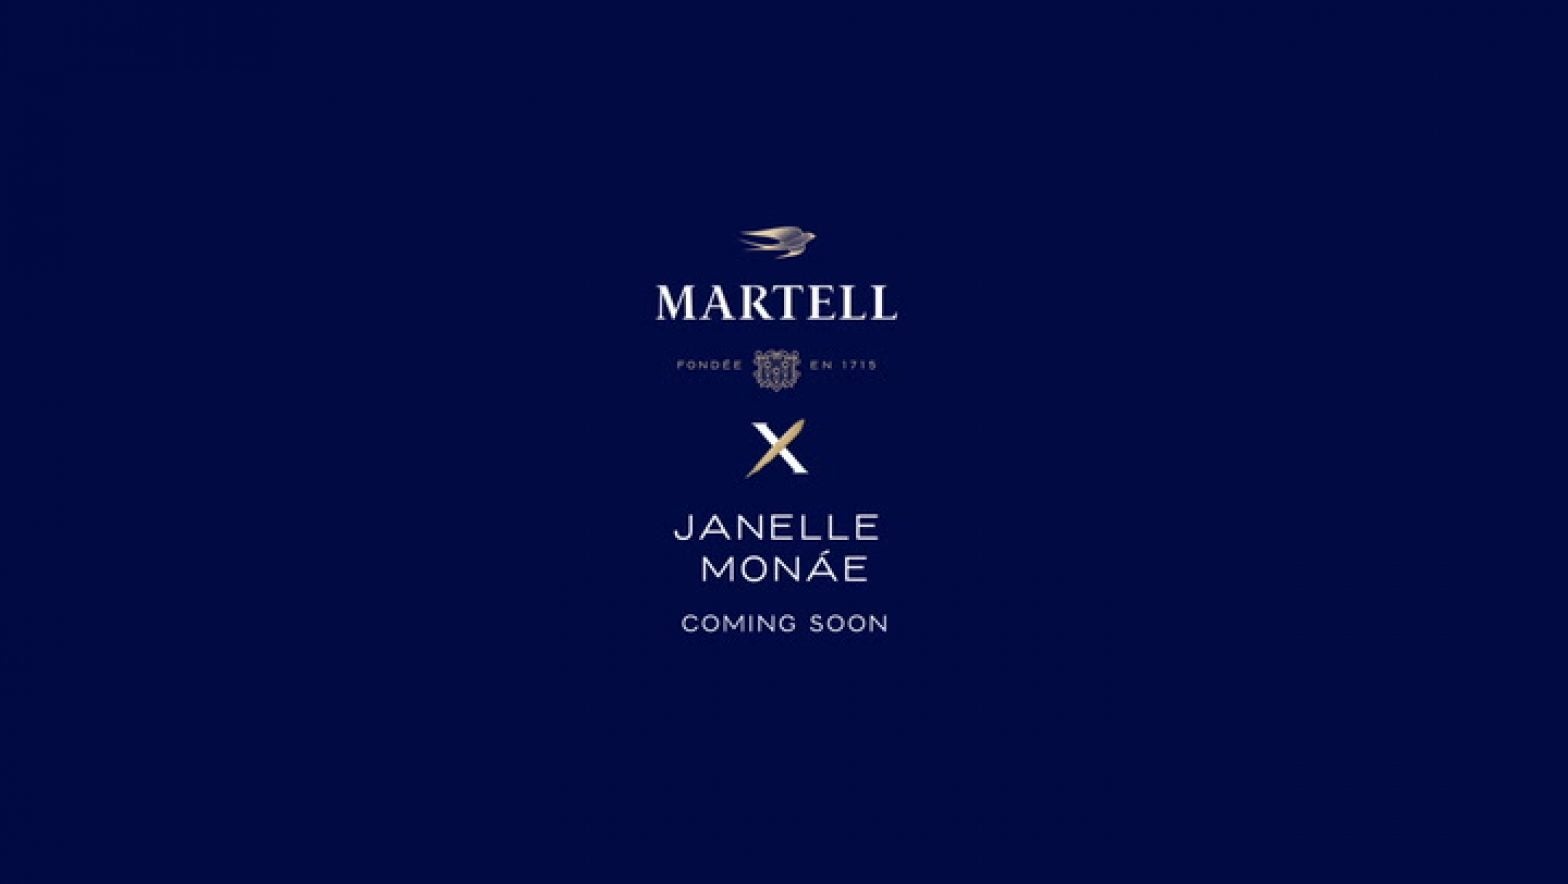 Martell Blue Swift Sizzle| Janelle Monàe